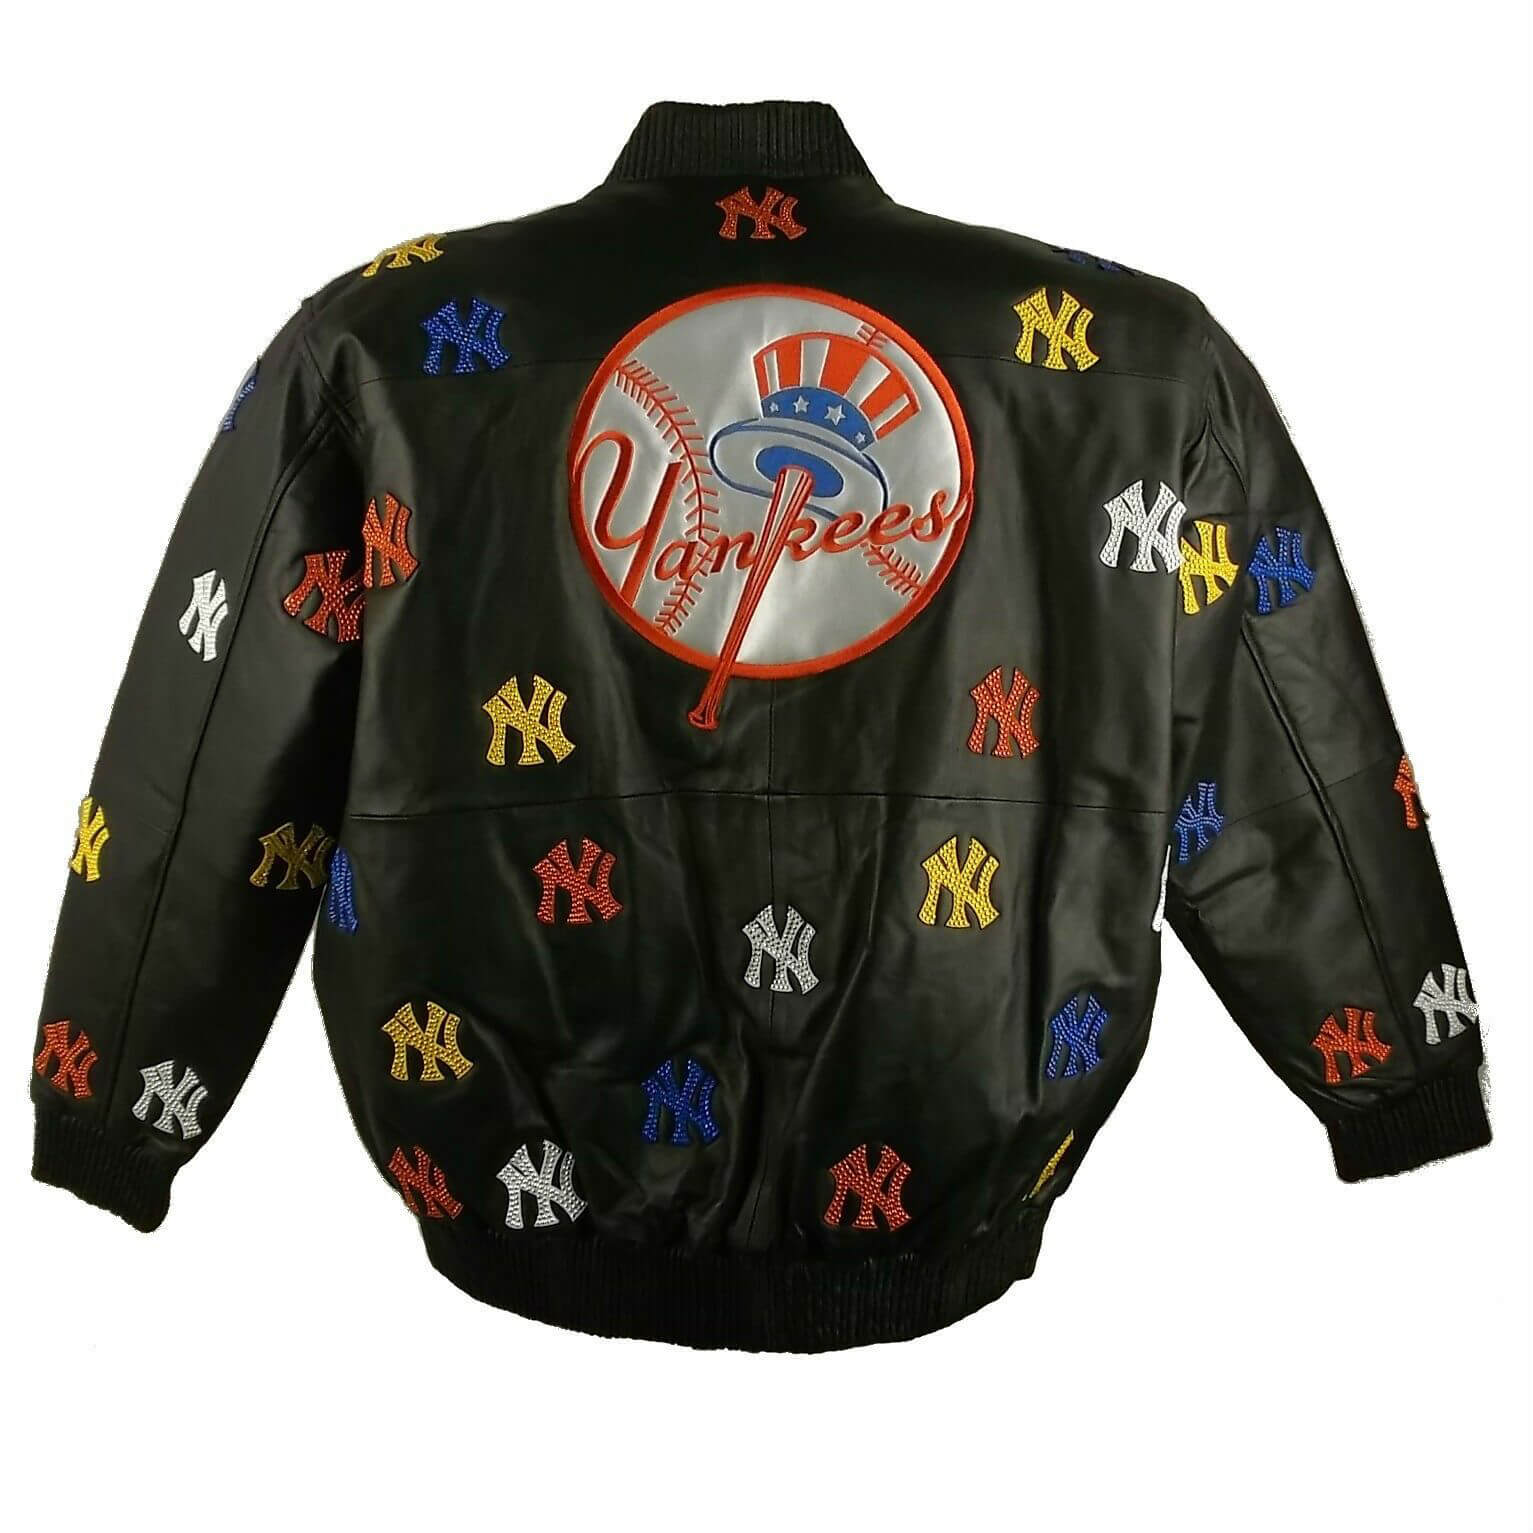 Maker of Jacket Fashion Jackets New York Yankees Block Red Black MLB Leather